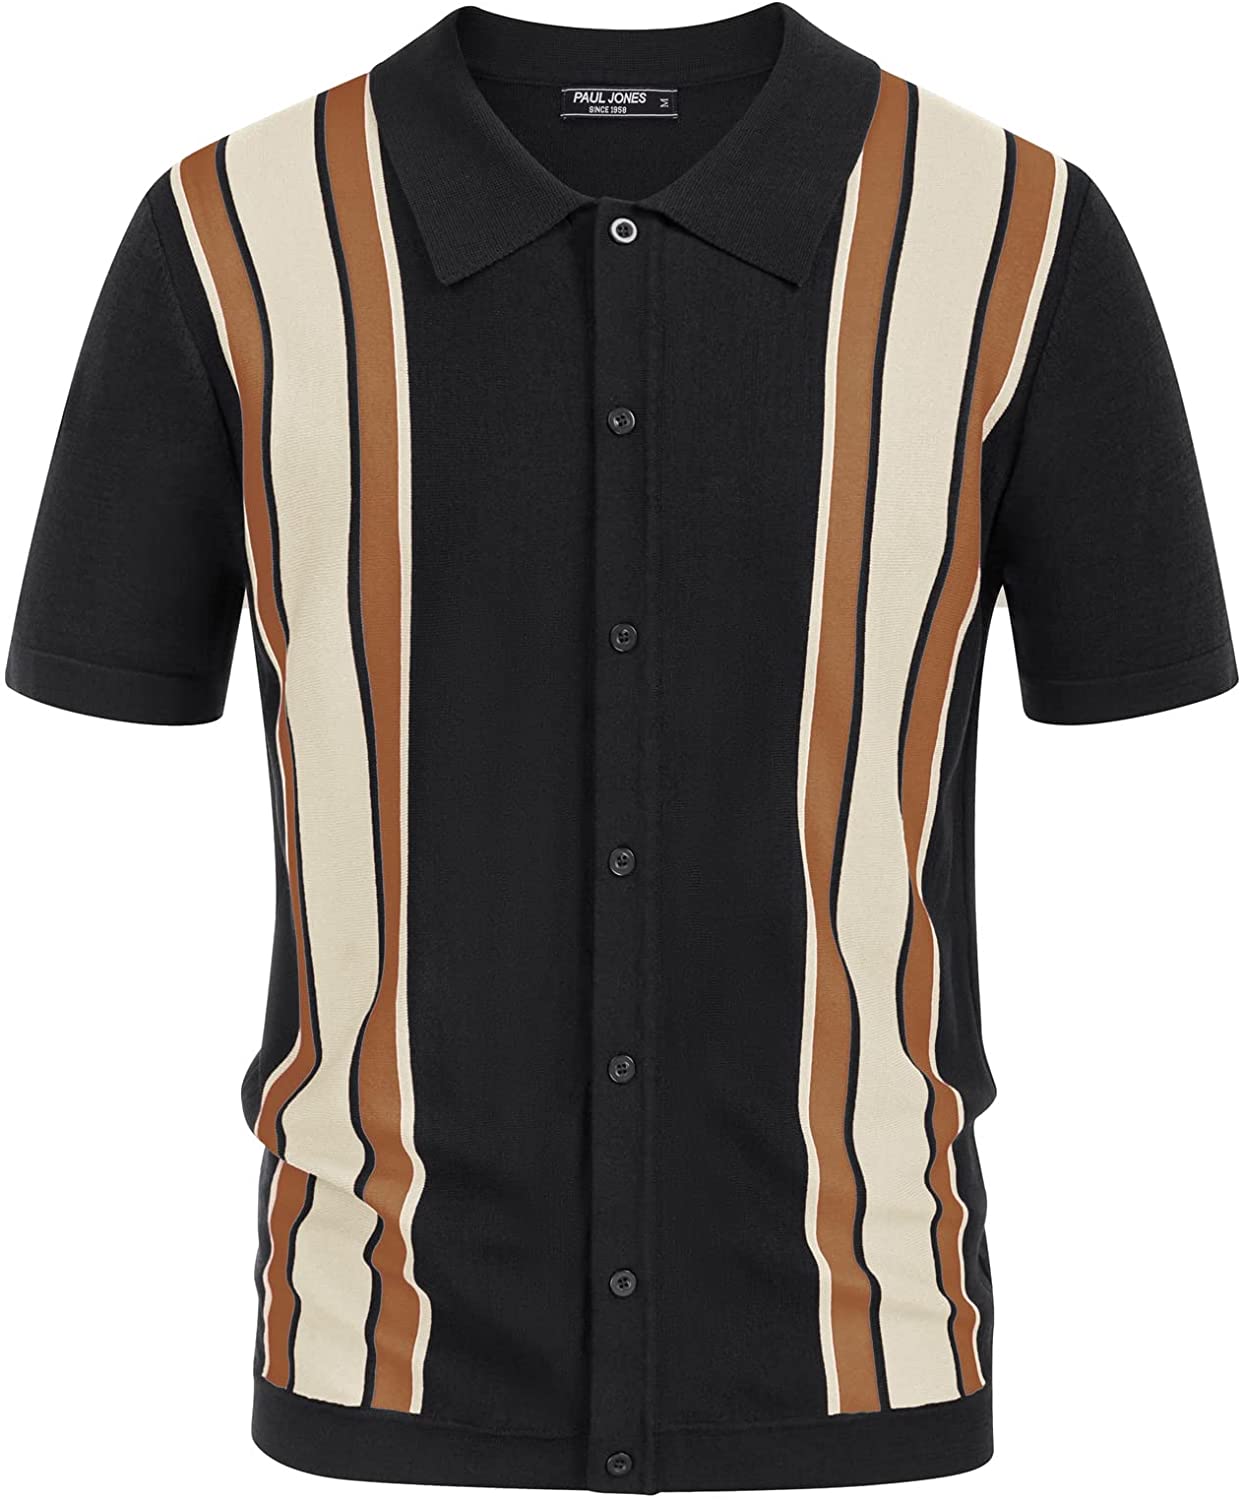 PJ PAUL JONES Mens Polo Shirts Vintage Striped Lightweight Knitting ...